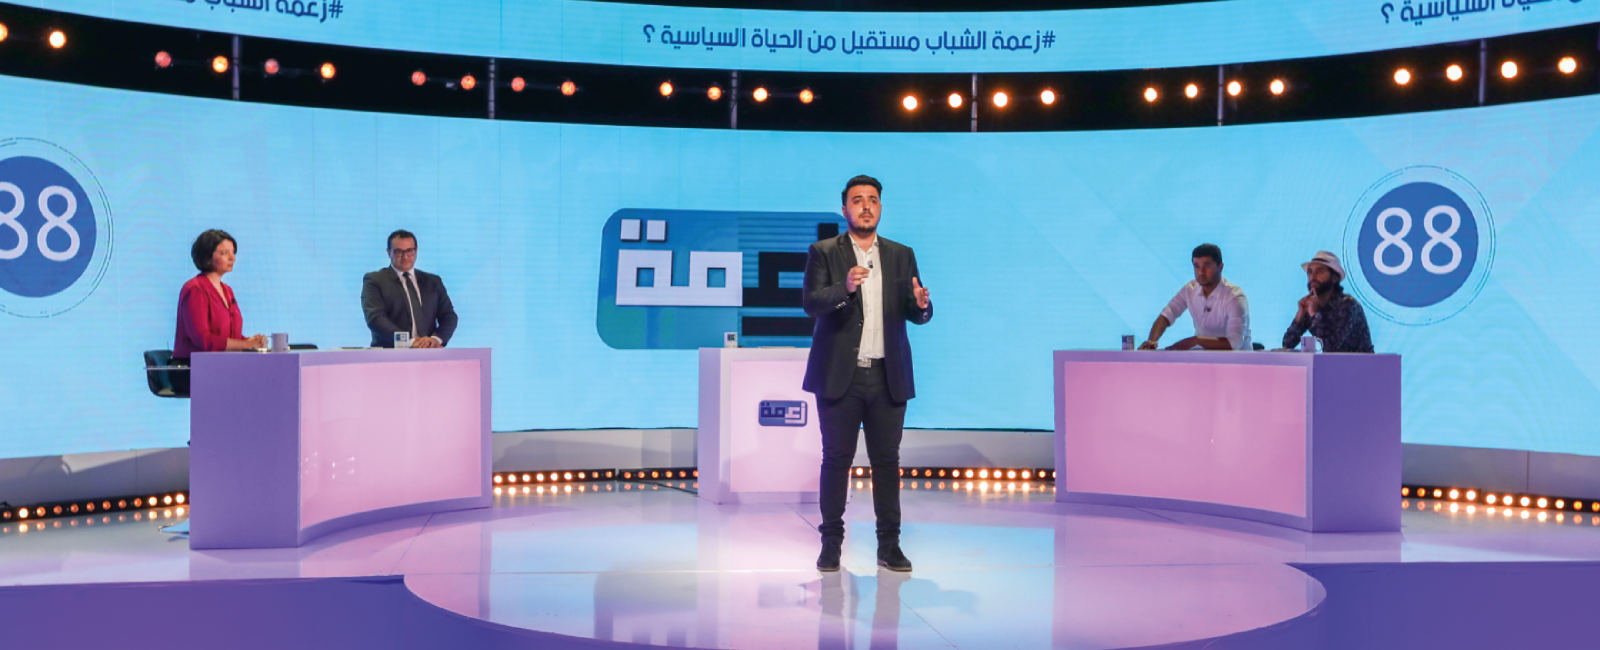 Debate Tunisia Youth Studio Education Public Democracy 